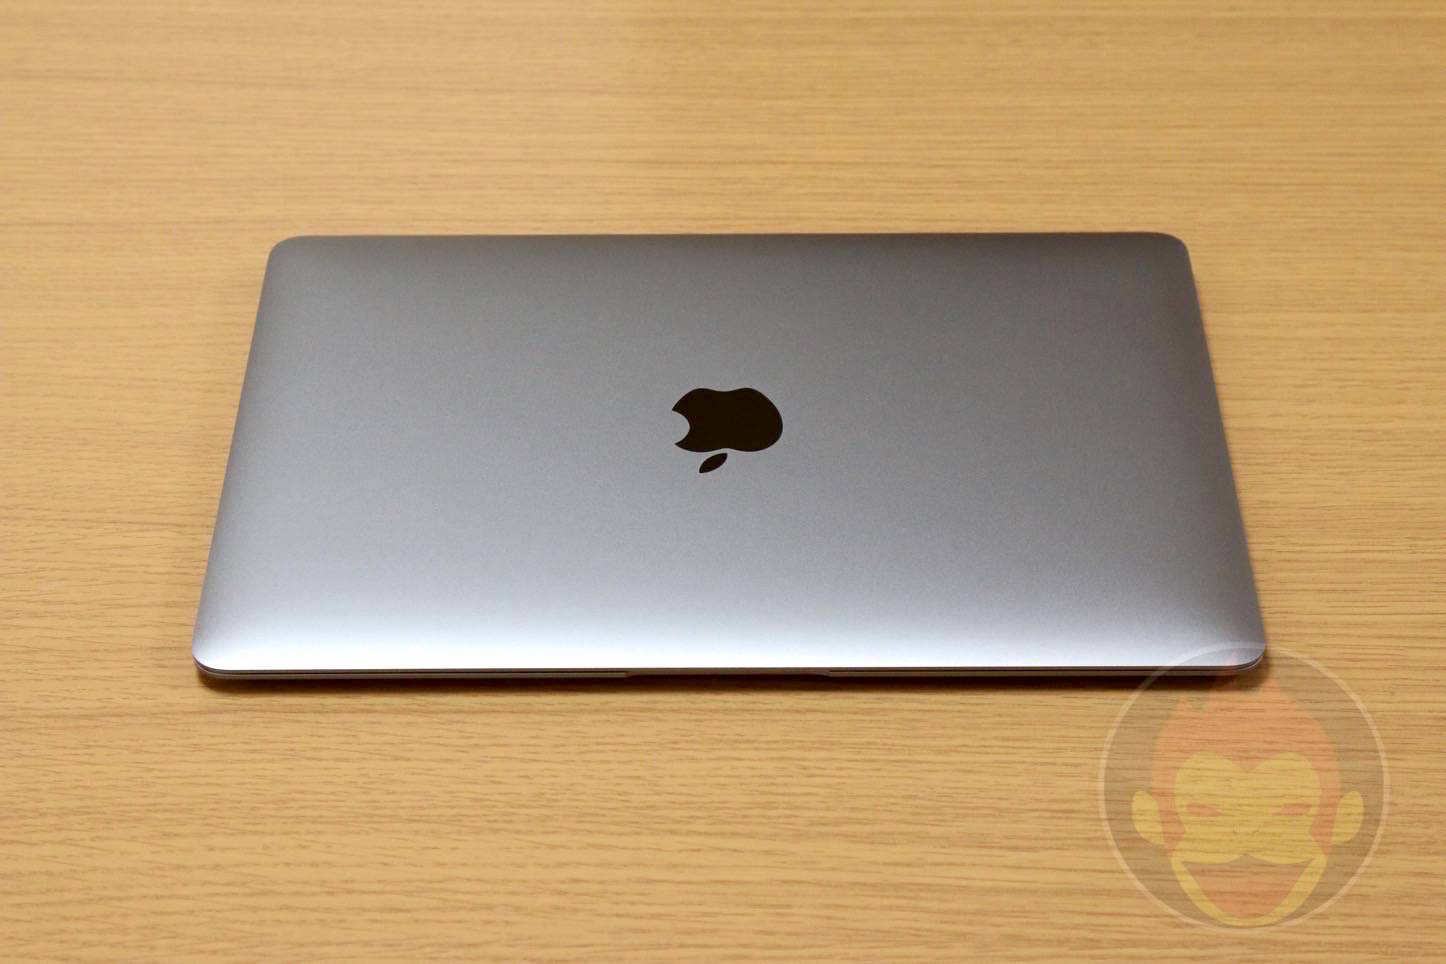 12inch-The-New-MacBook-32.JPG